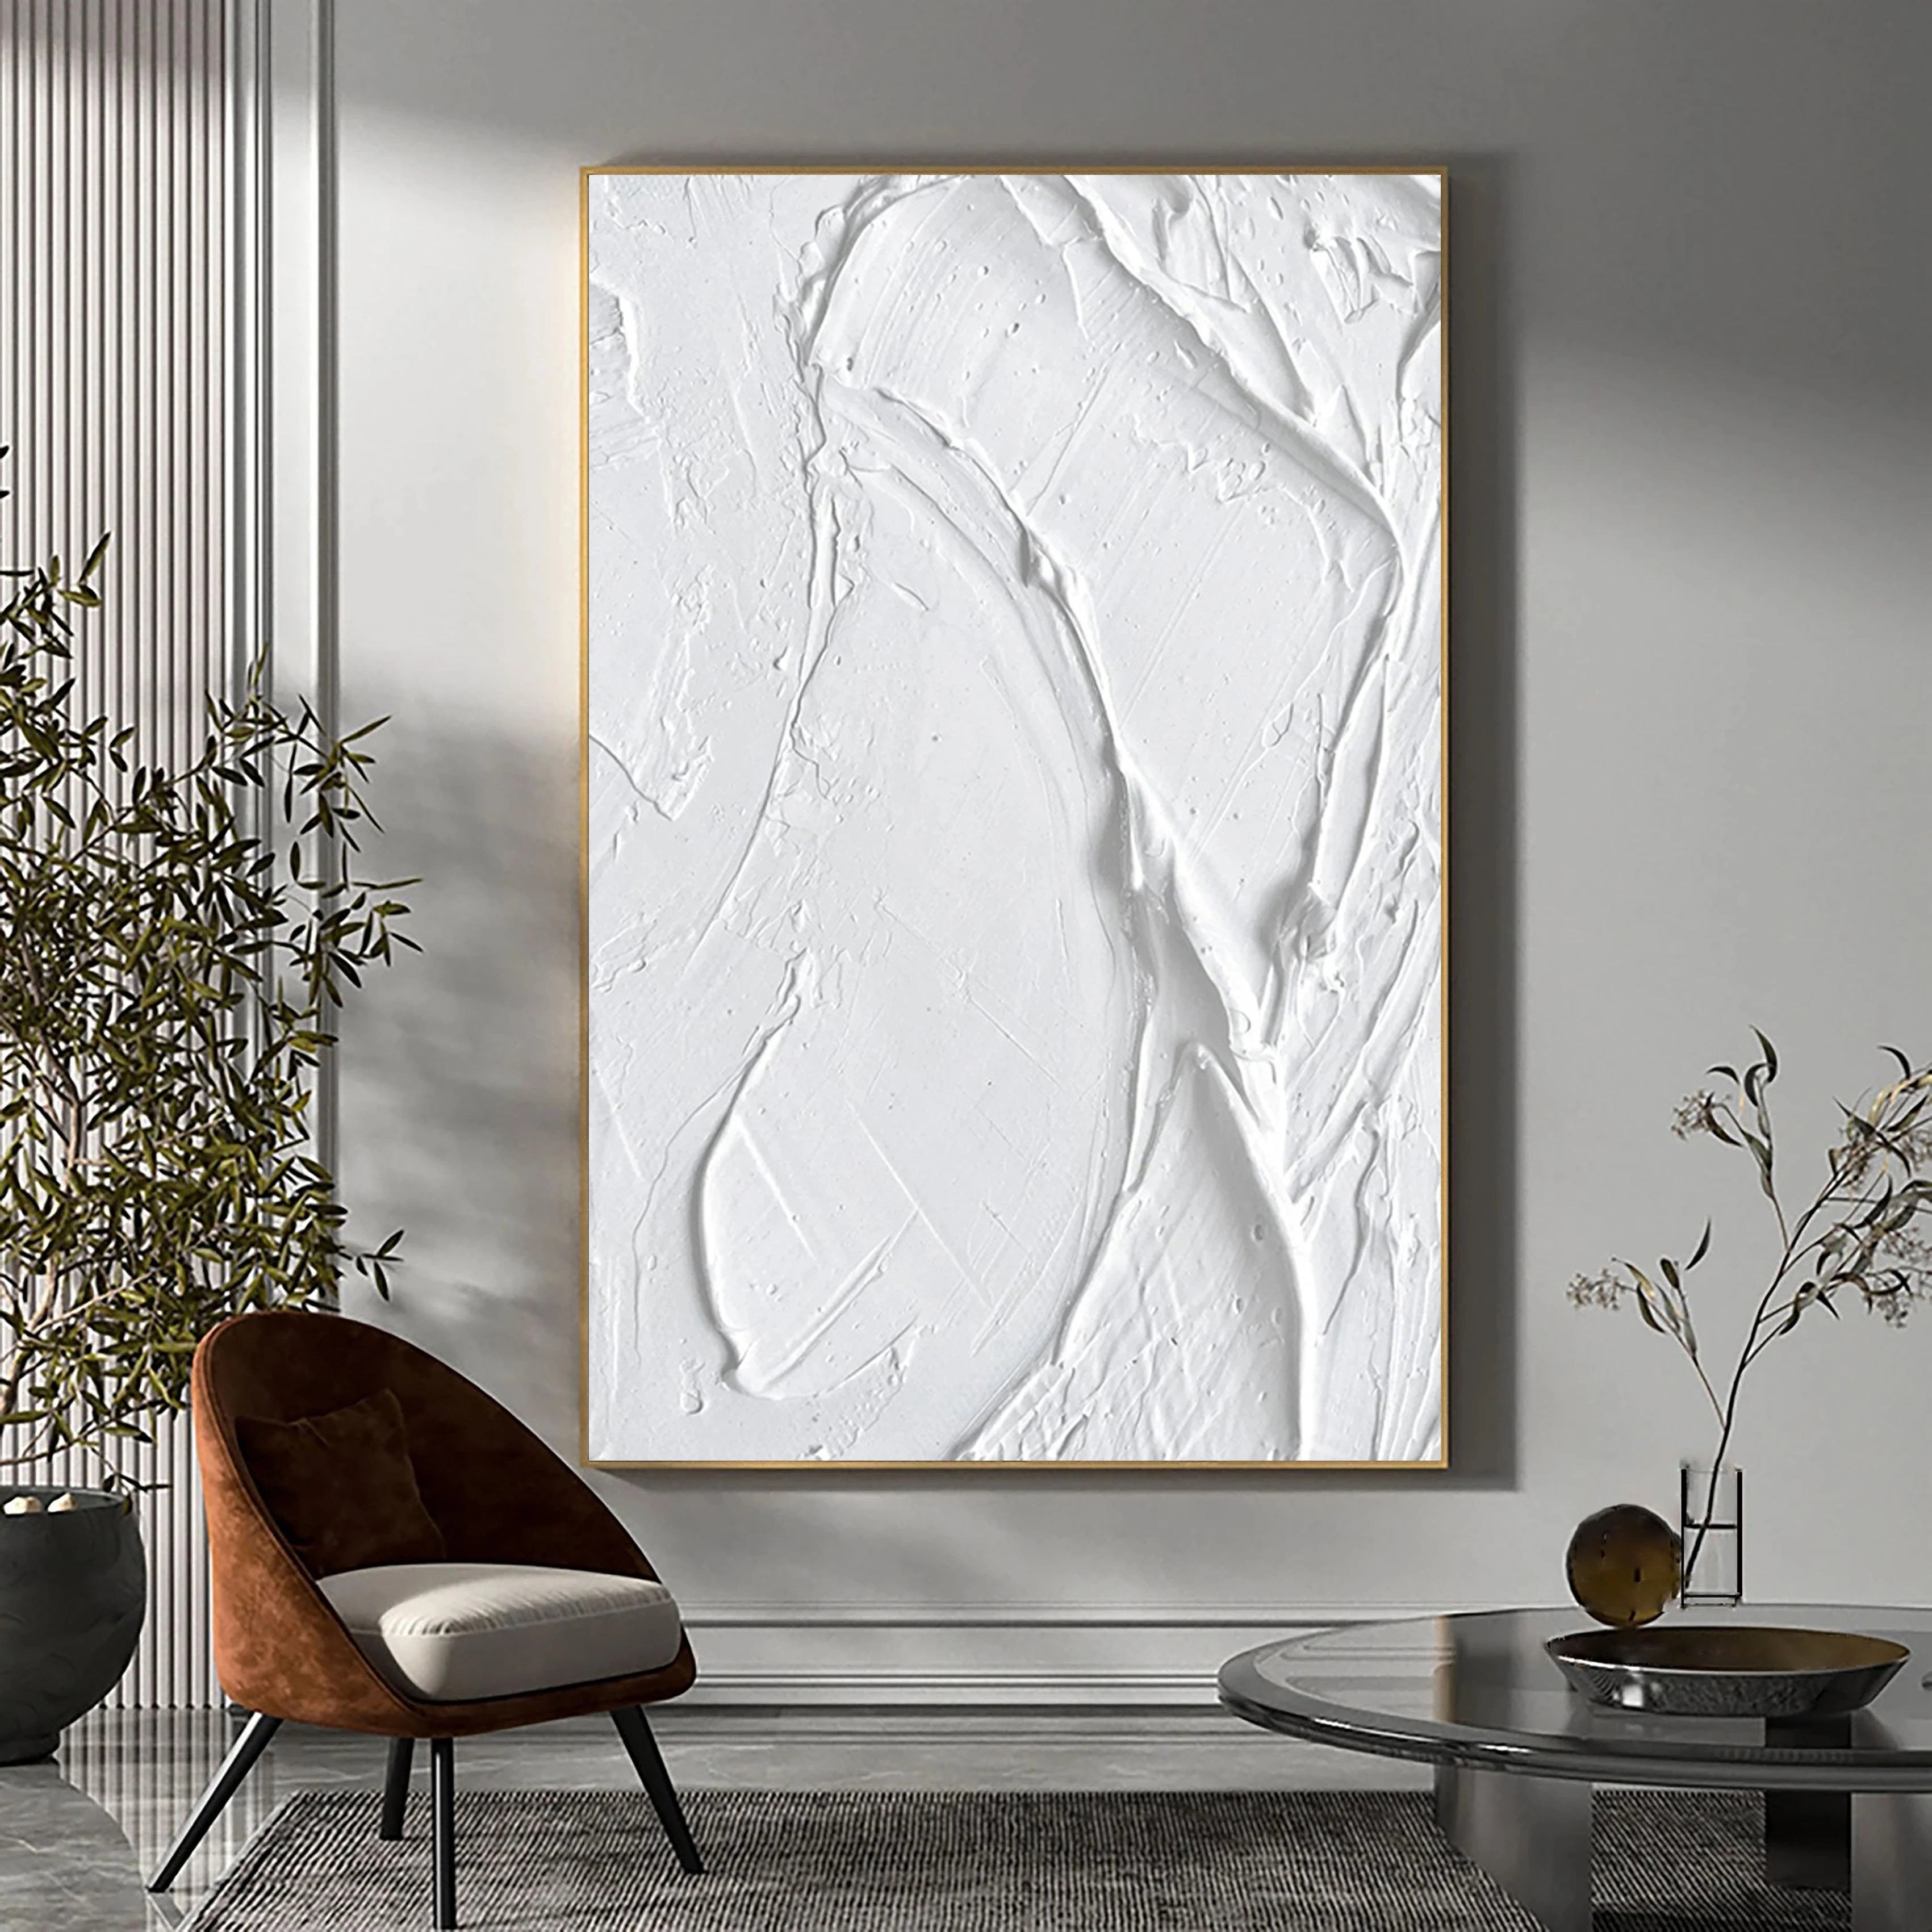 White 3D Textured Plaster Art Painting on Canvas Minimalist Room Decor